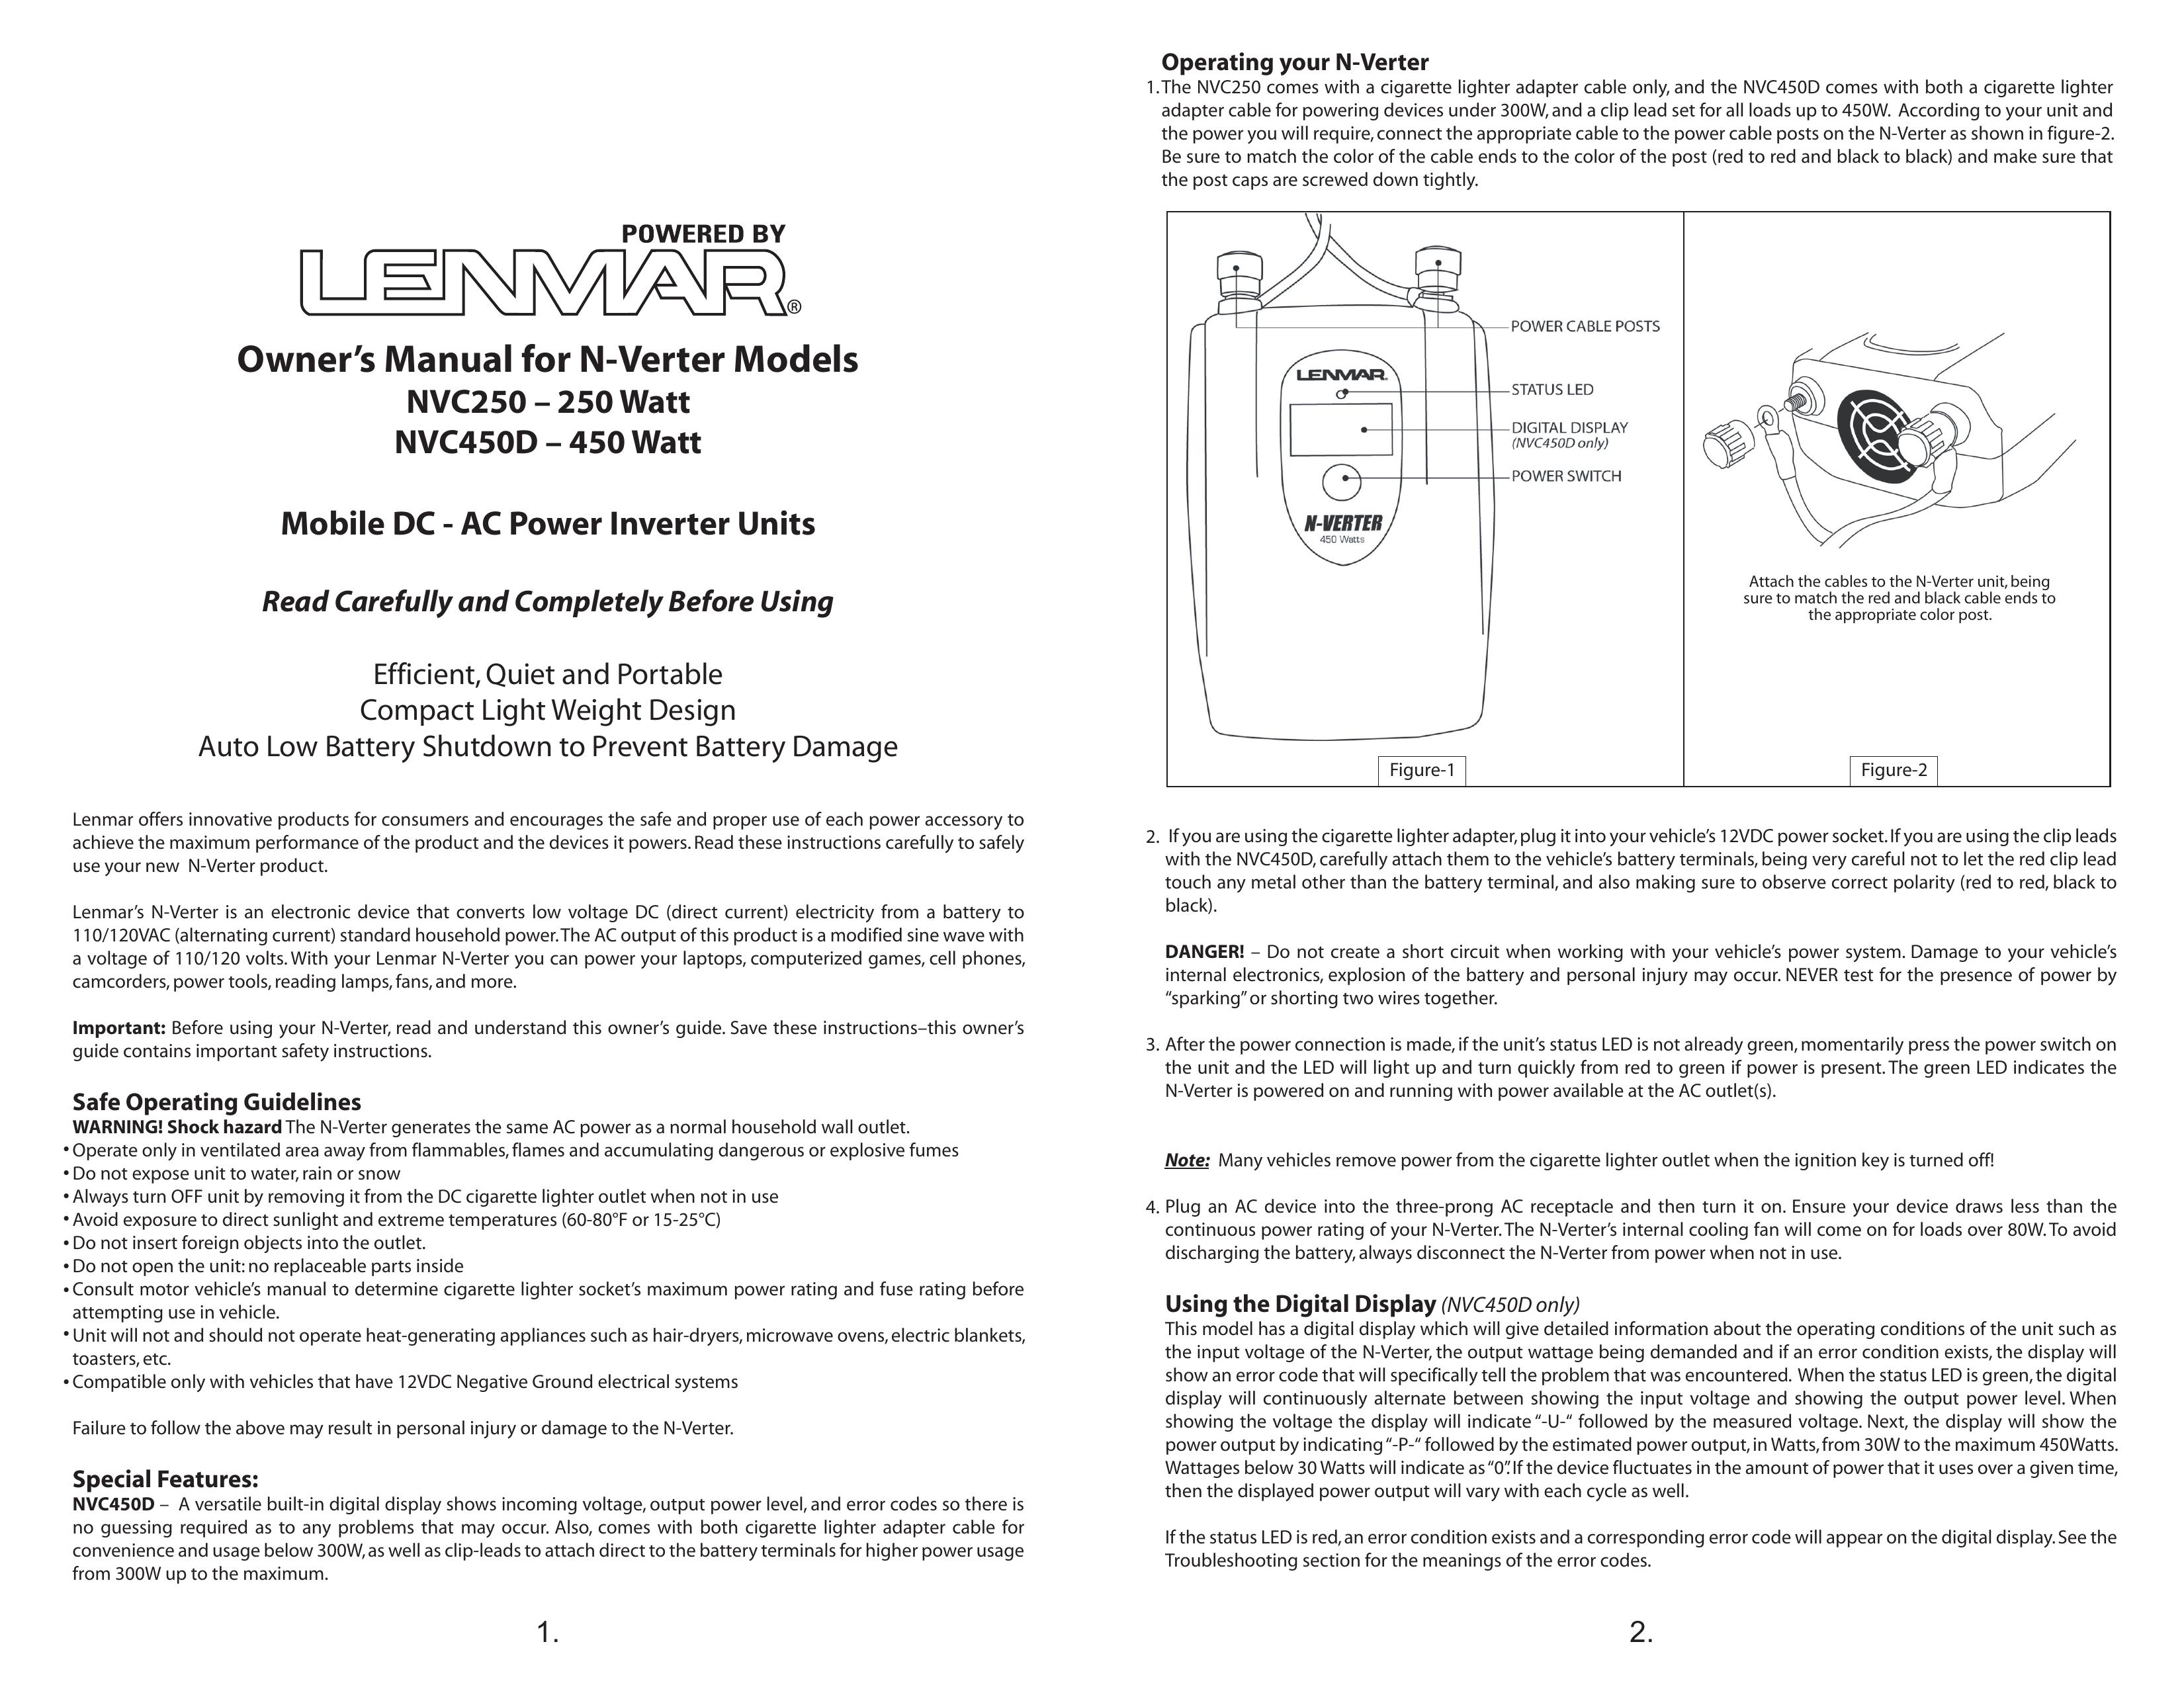 Lenmar Enterprises NVC250 Portable Generator User Manual